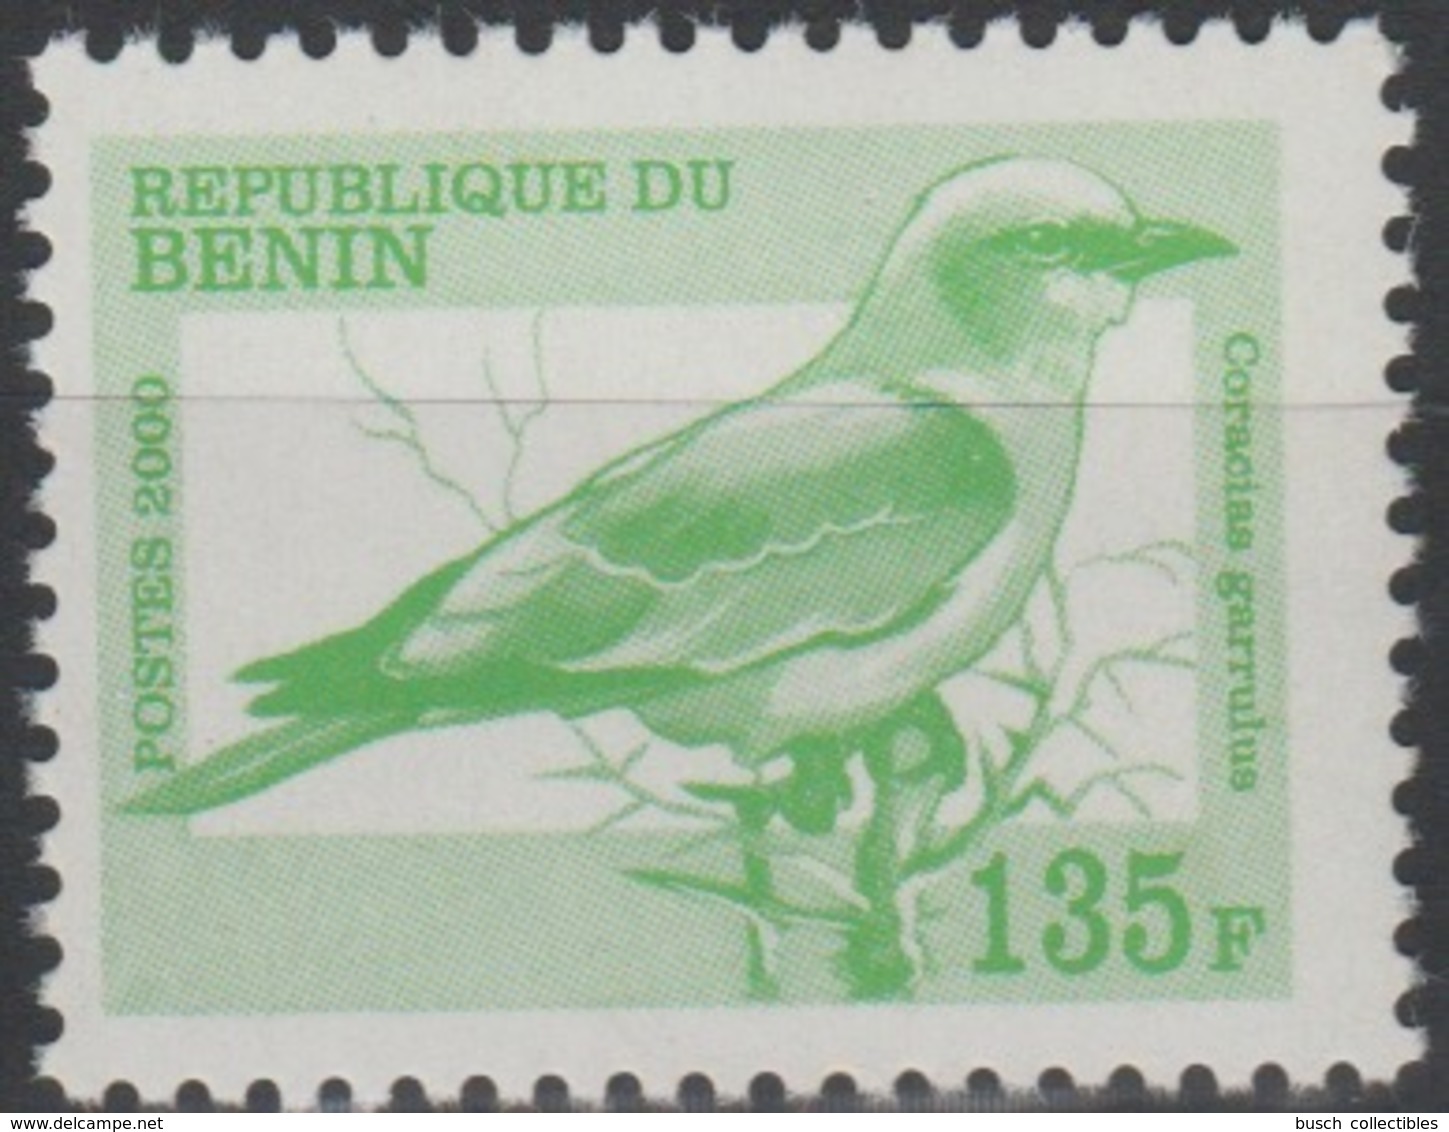 Bénin 2000 Mi. H1232 135 F Fauna Faune Bird Oiseau Vogel Coracias Garrulus MNH** Rare - Benin - Dahomey (1960-...)